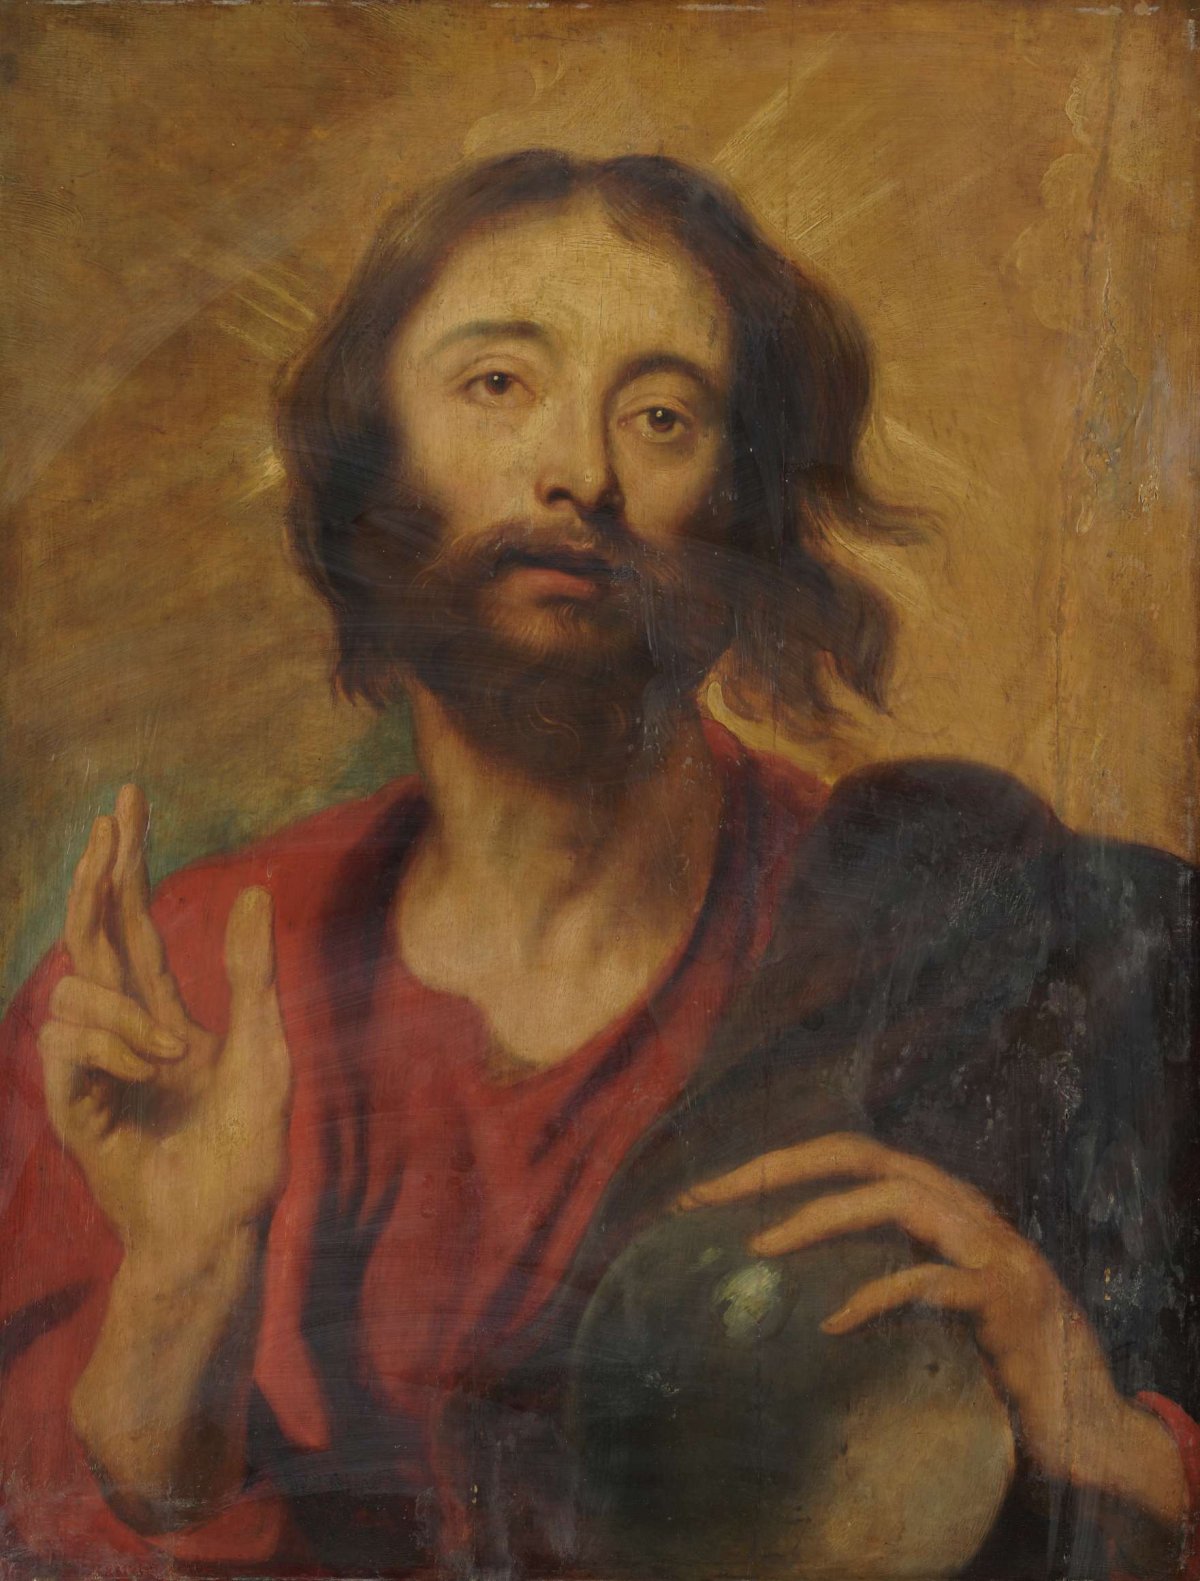 Christ as Saviour of the World, Anthony van Dyck, c. 1620 - c. 1630